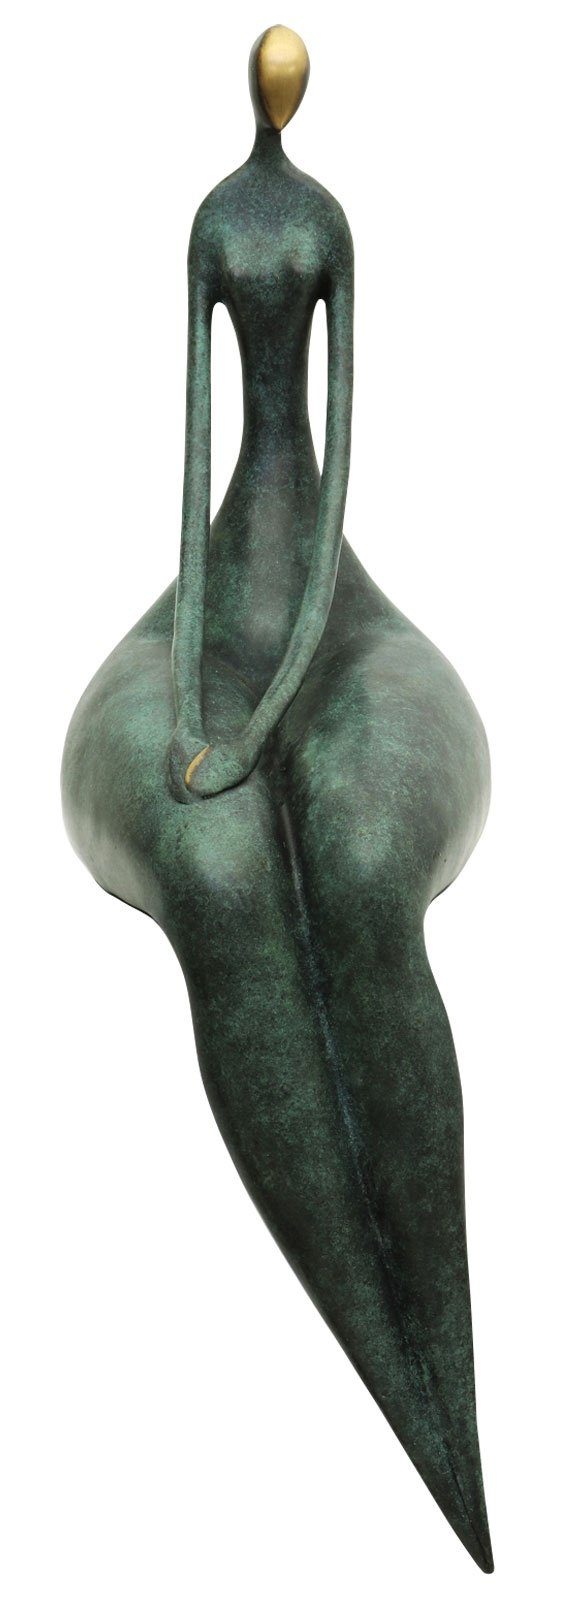 Aubaho Skulptur Bronzeskulptur Erotik Statue Frau Antik-Stil - Bronze 44cm Figur Akt